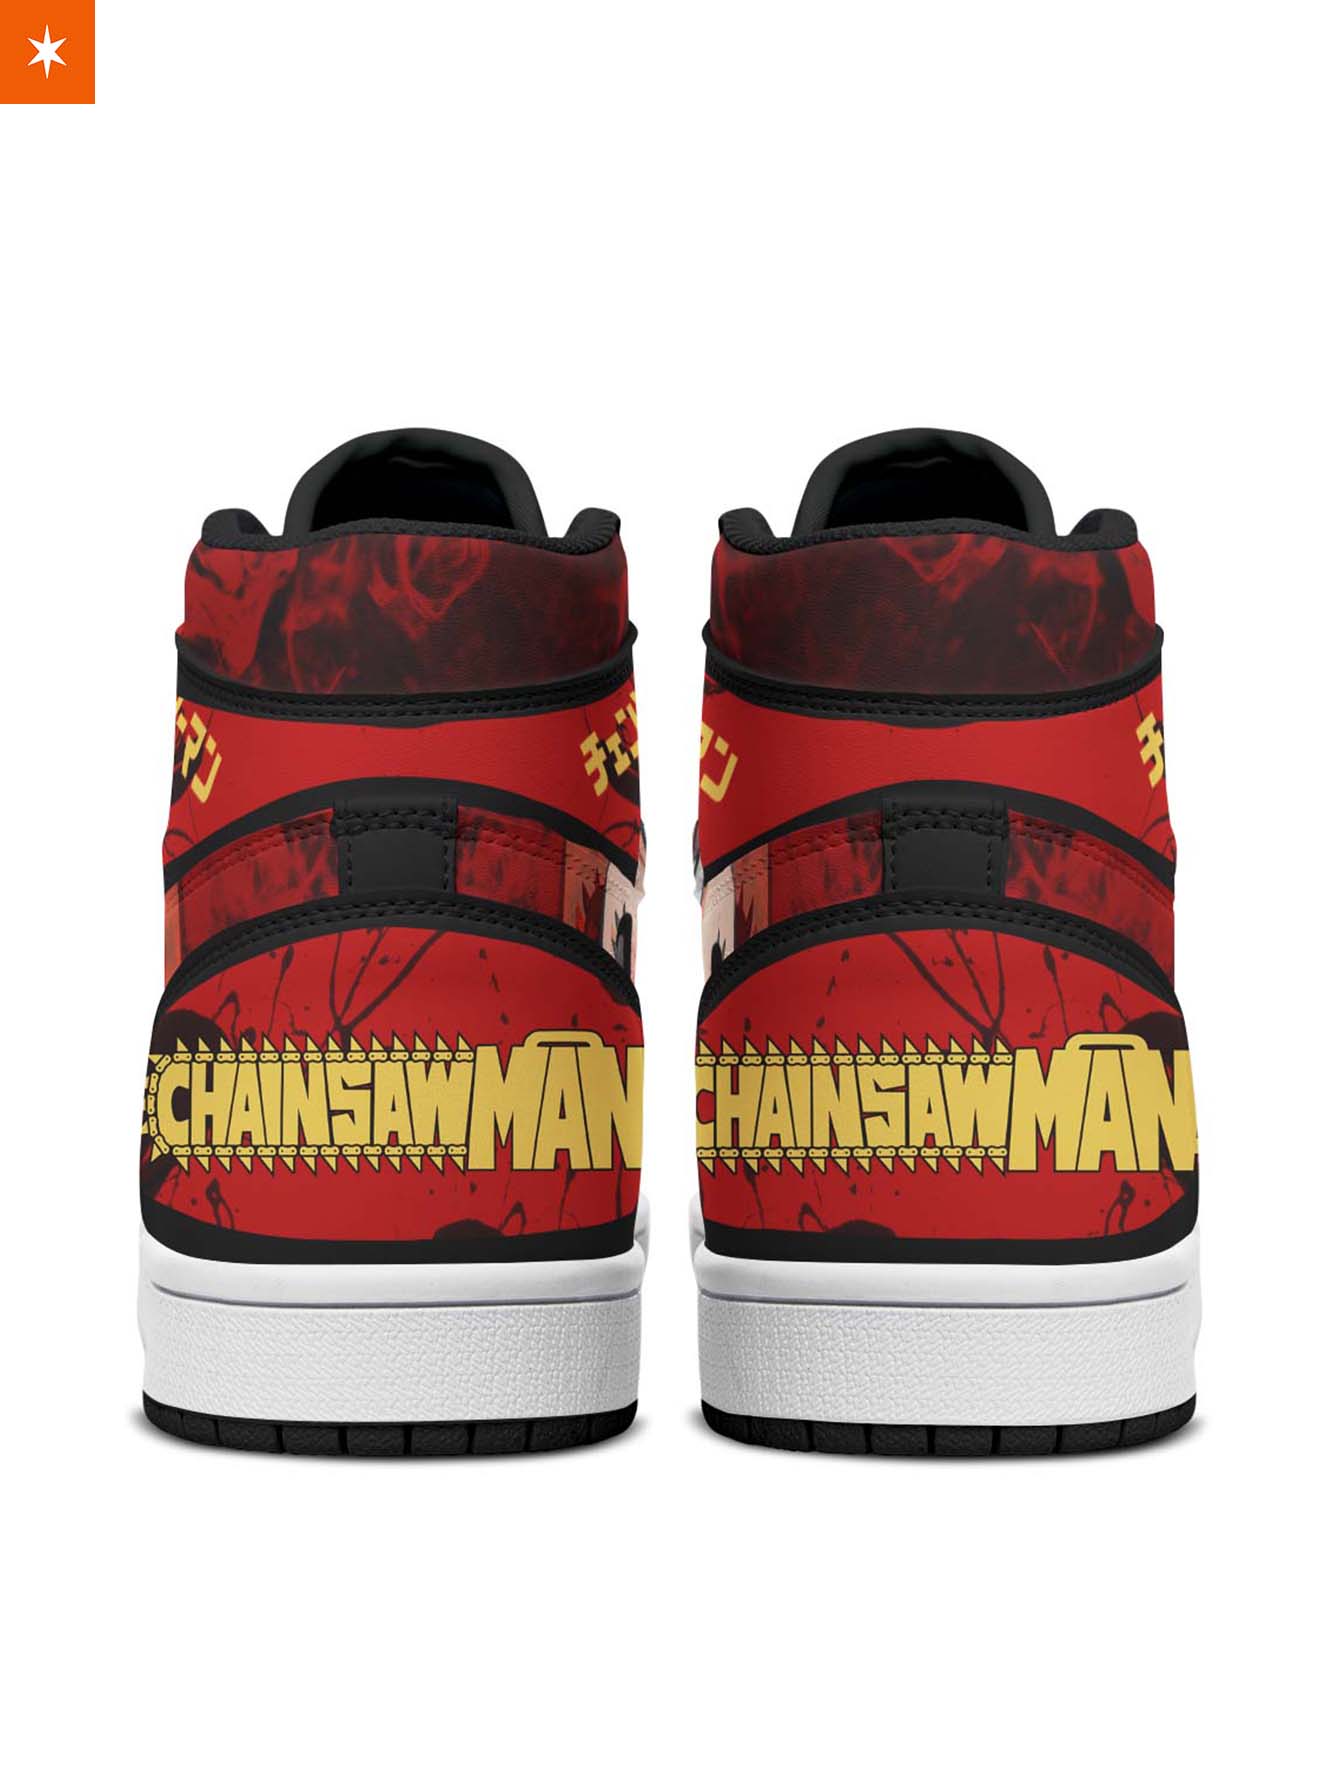 Fandomaniax - Denji Chainsawman JD Sneakers